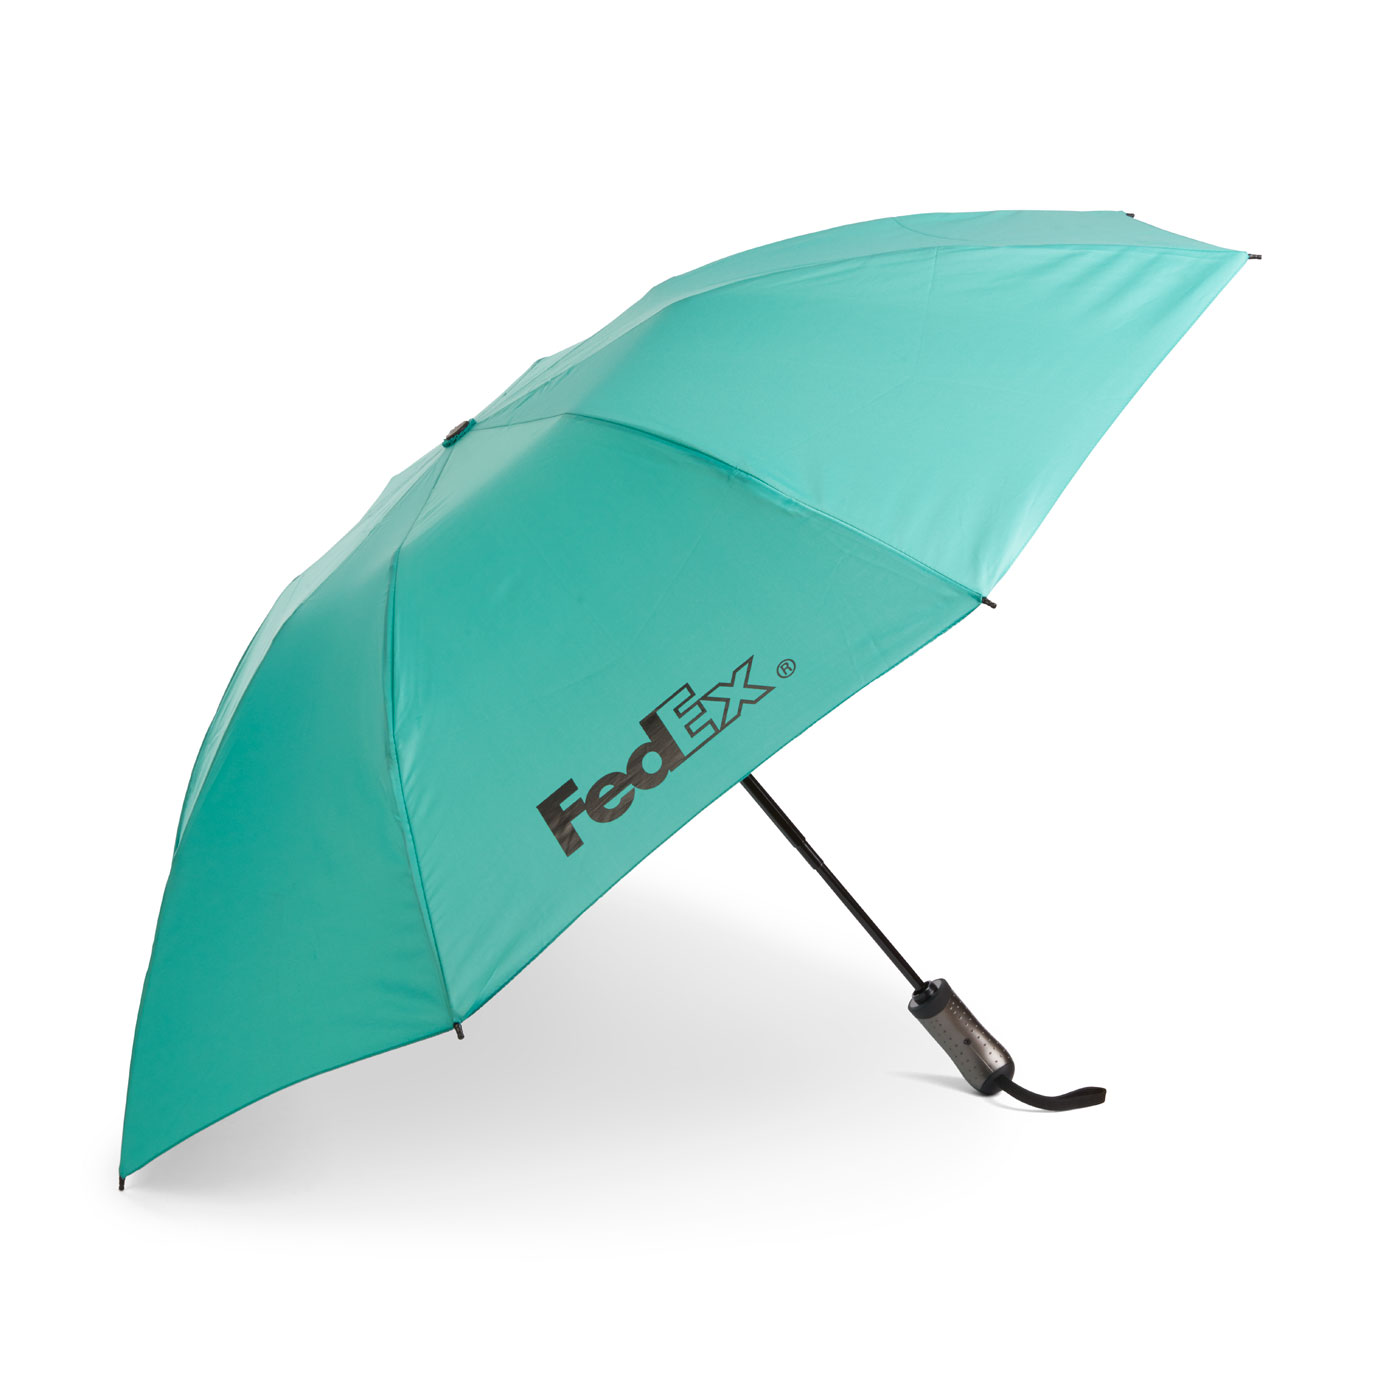 fedex-inverted-automatic-umbrella-teal-the-fedex-company-store